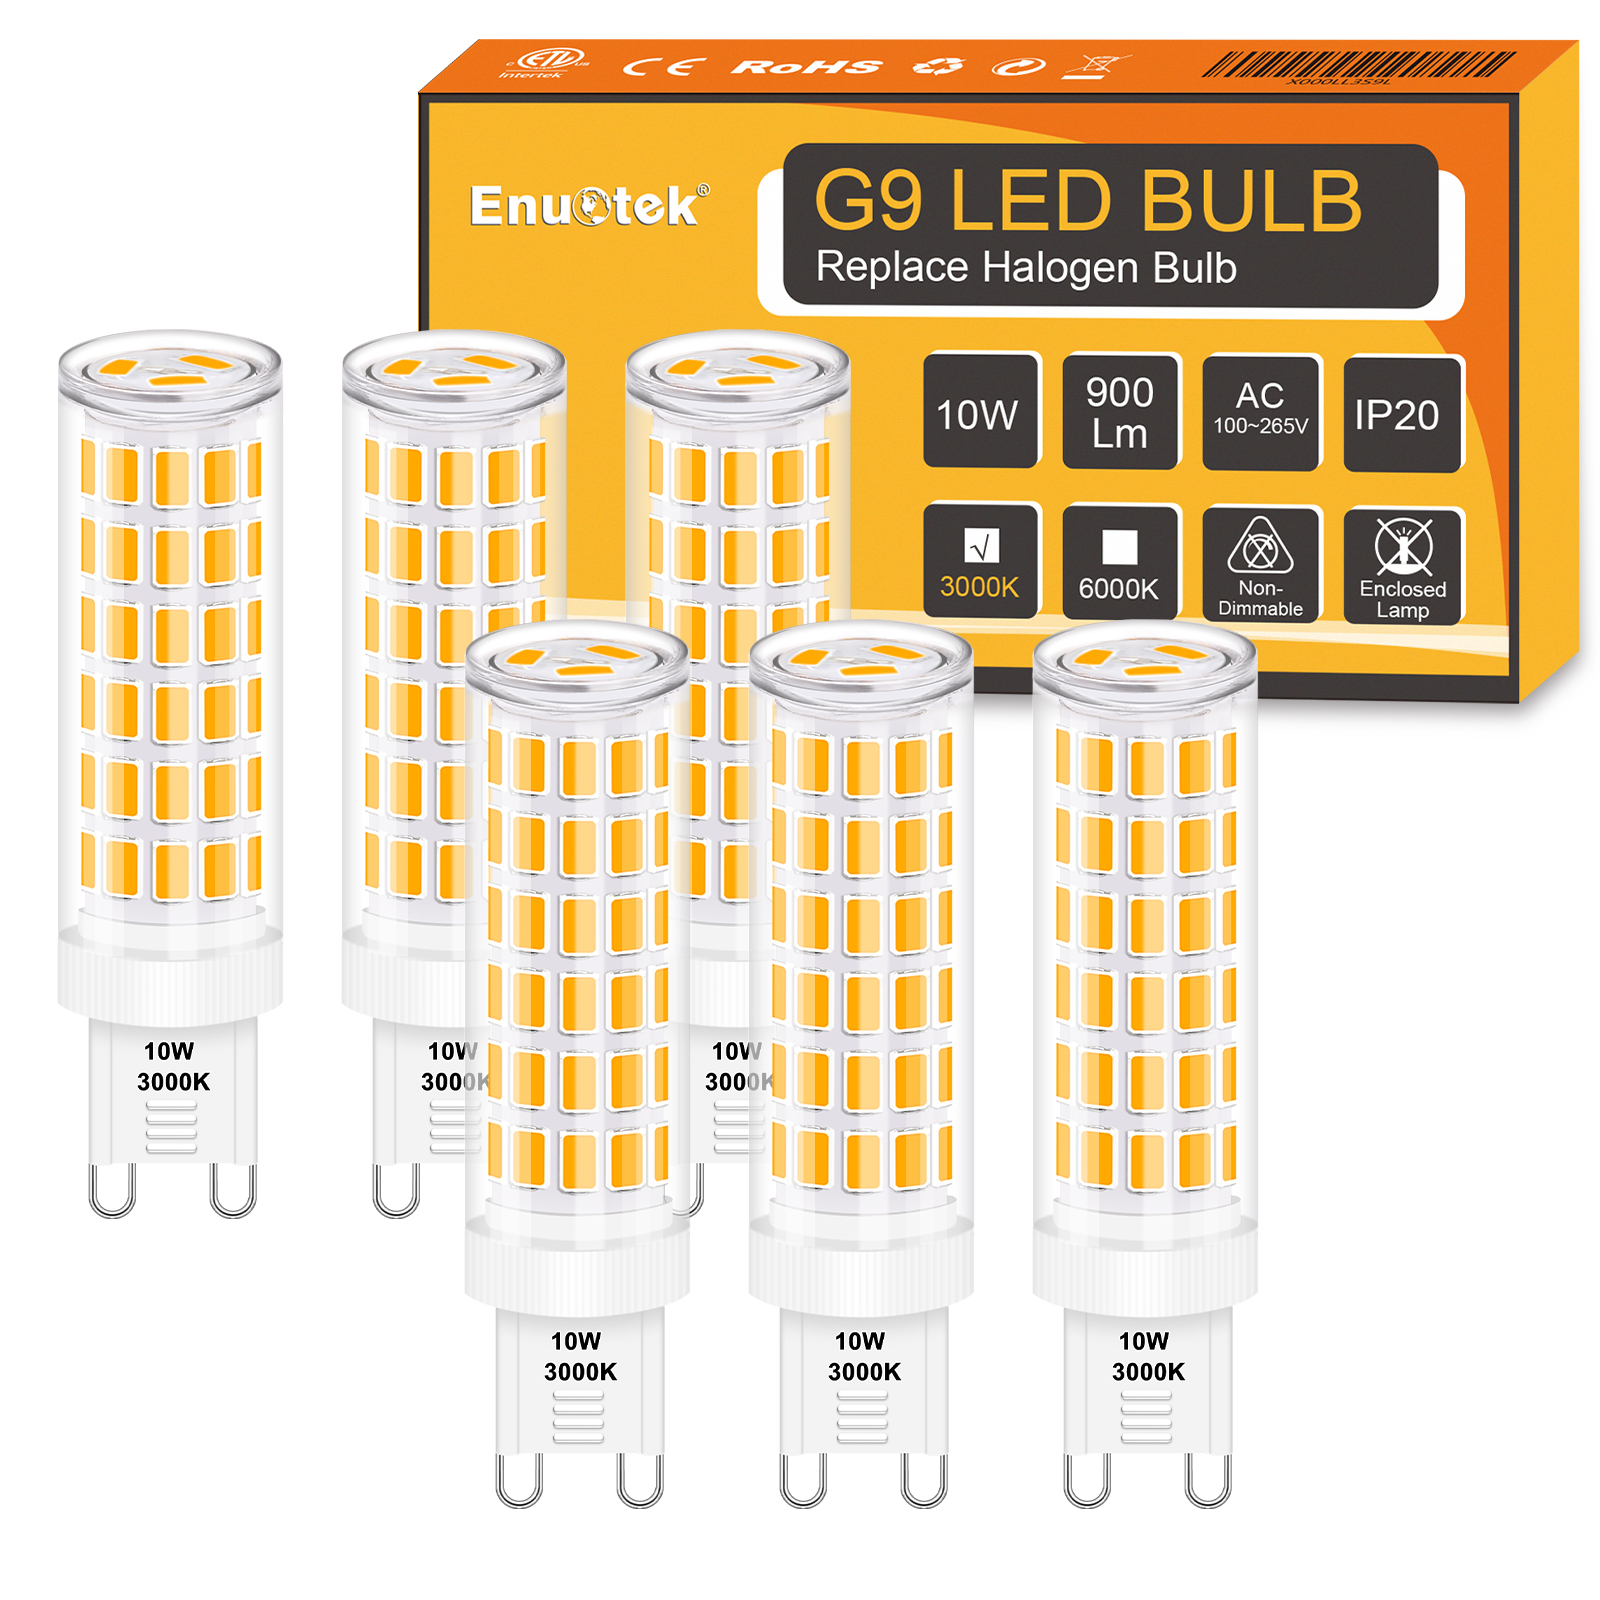 Super Bright 7 watt G9 LED Capsule Lamp - Daylight White